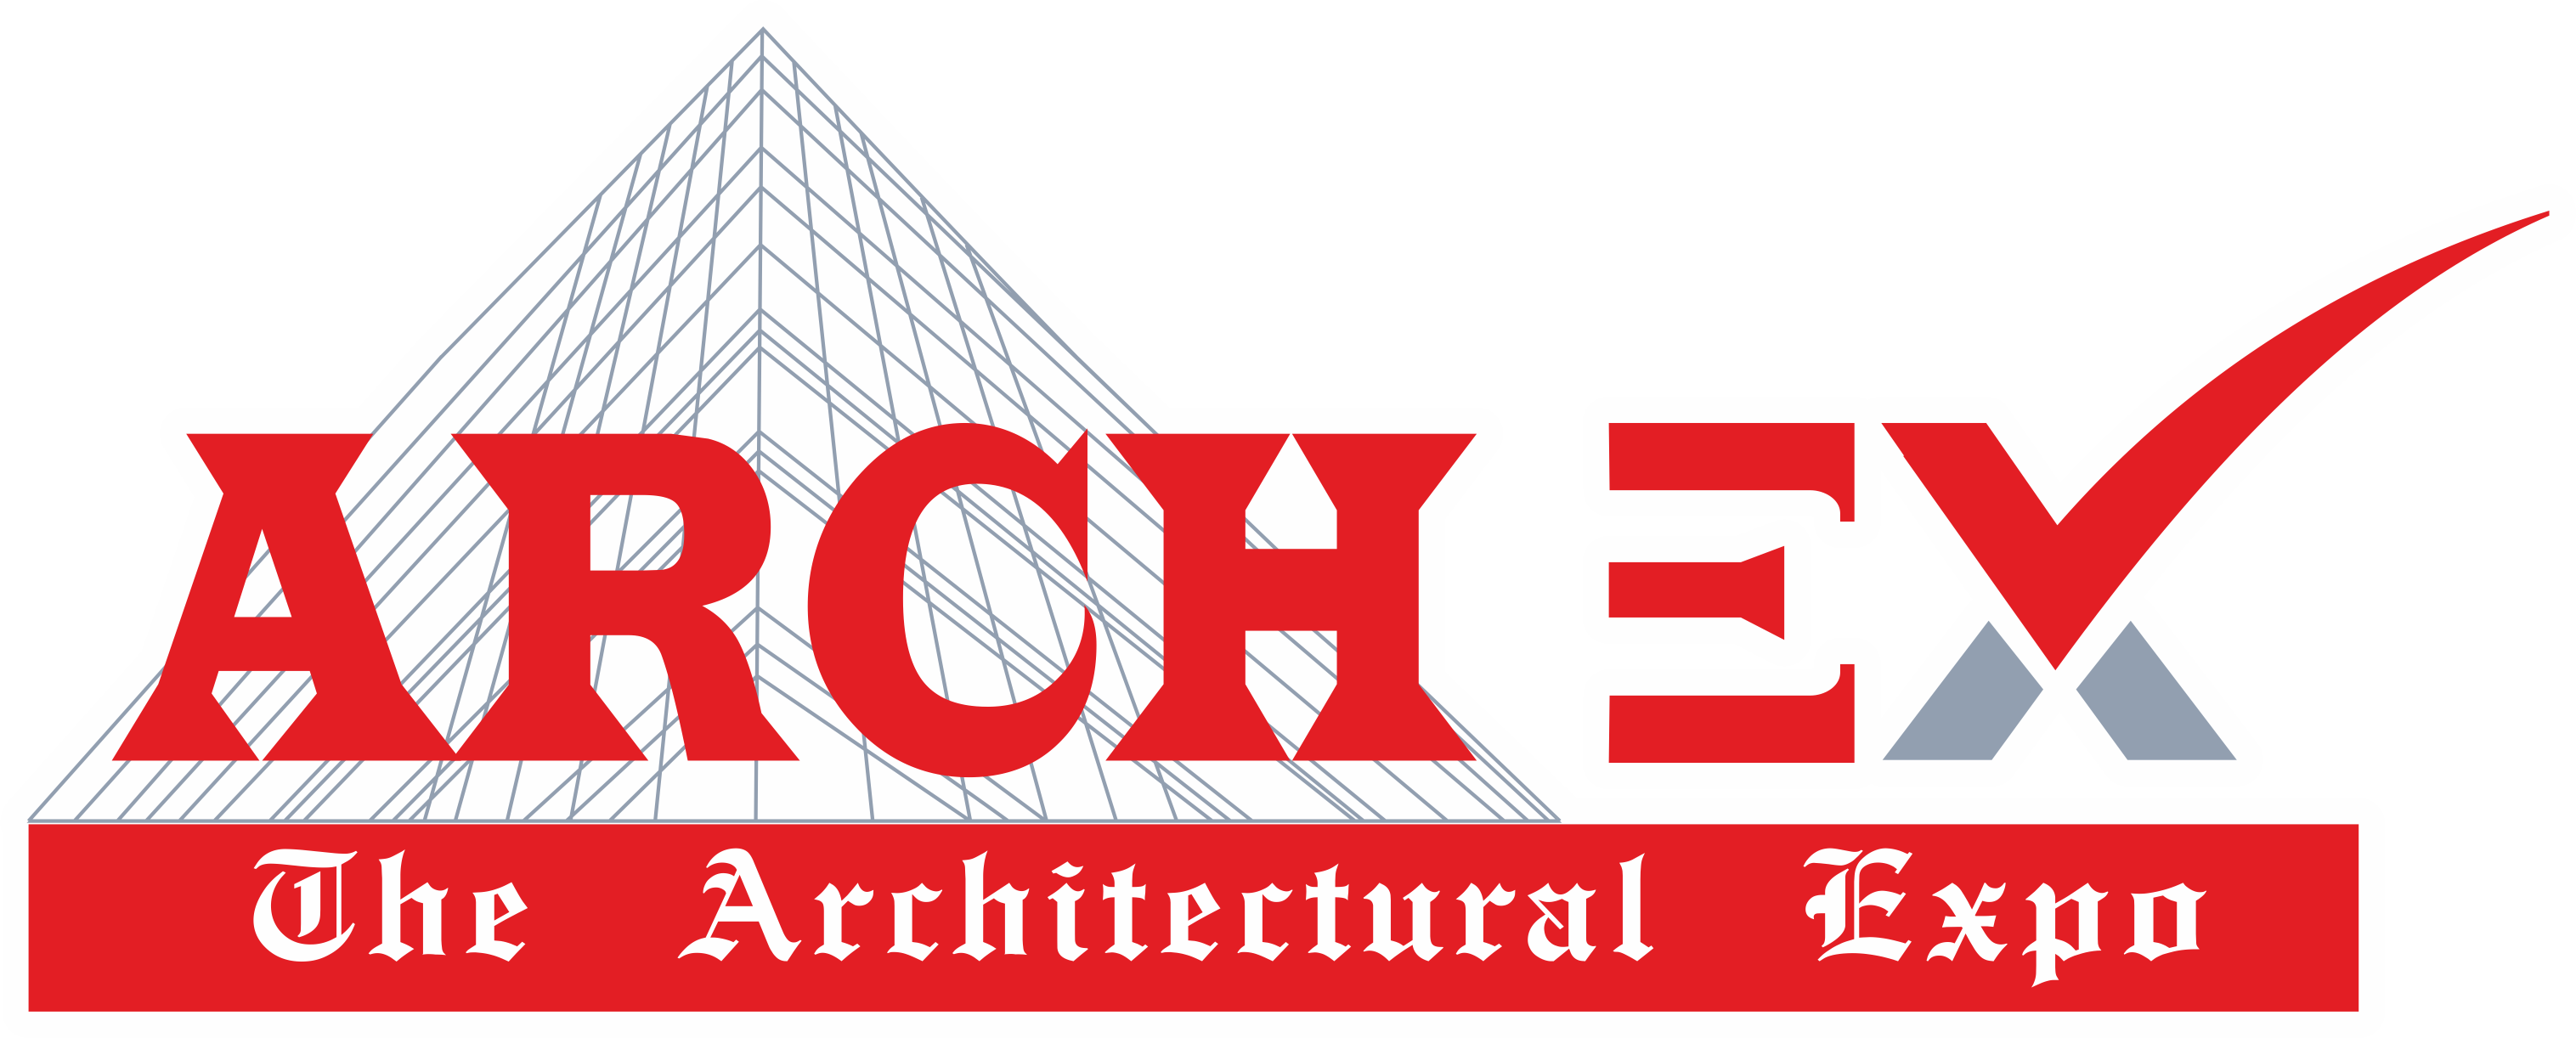 ARCHEX-The Architectural Expo